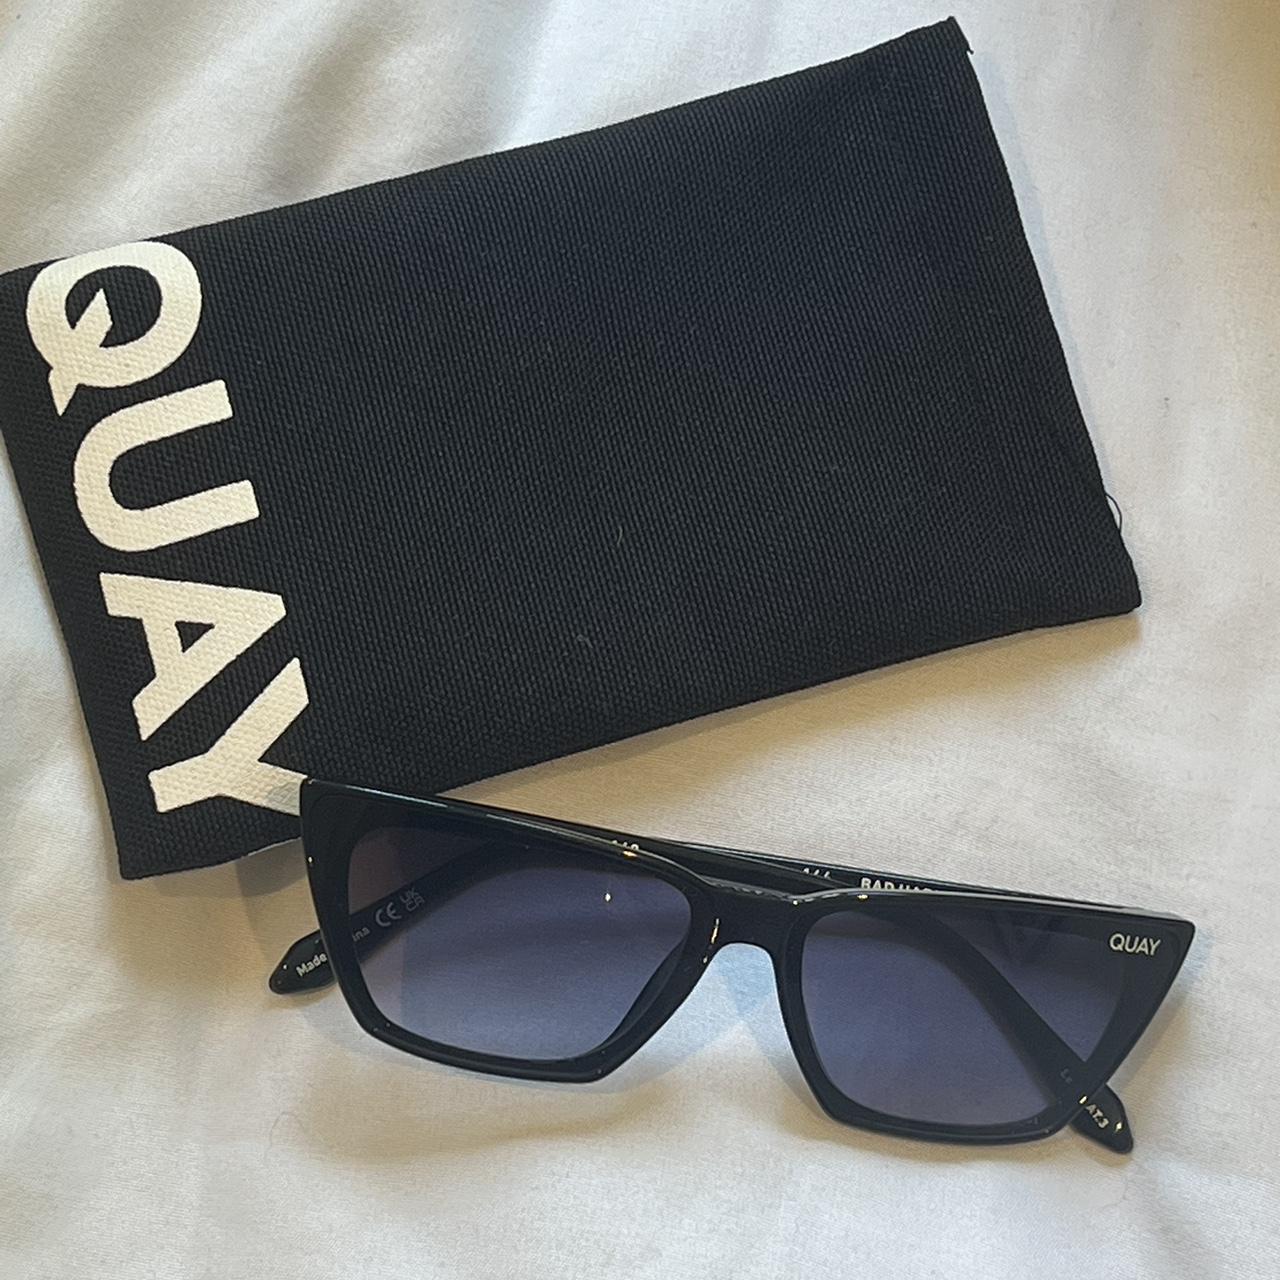 Brand new BAD HABIT sunglasses by QUAY 🖤 cat eye... - Depop